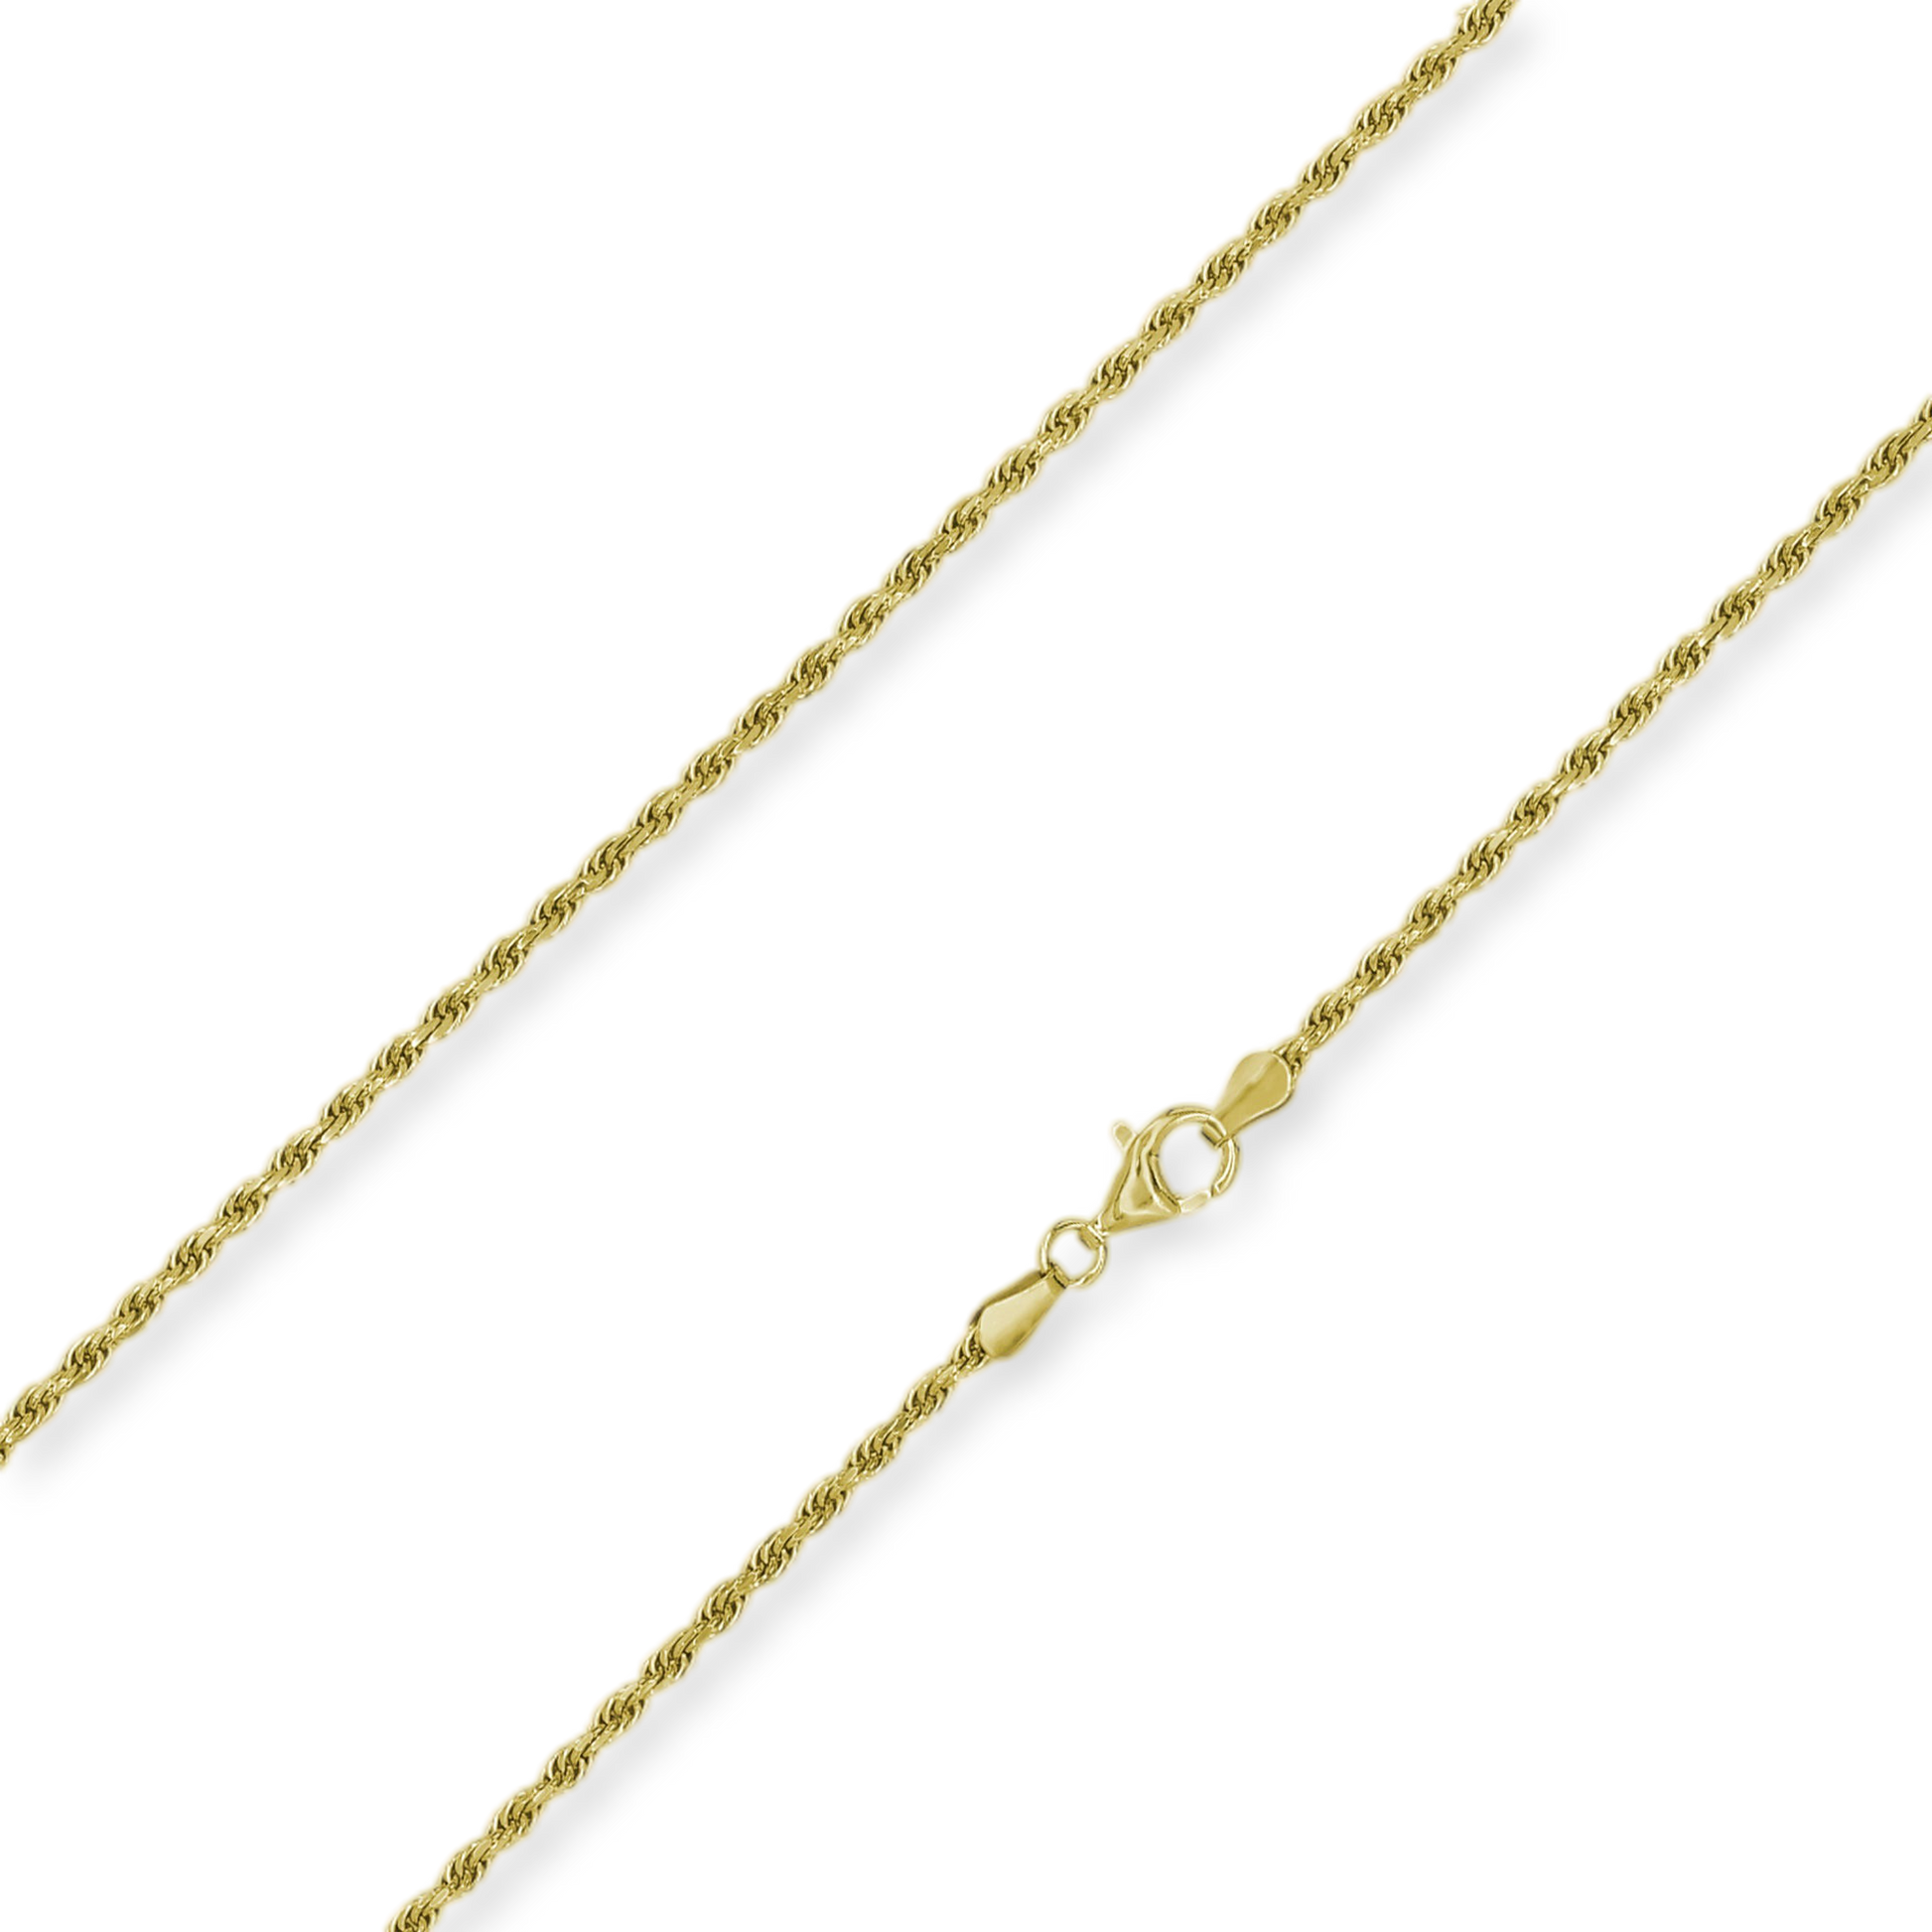 Stellari Gold 18 Karat over Sterling Silver 2.5mm Diamond Cut Rope Chain